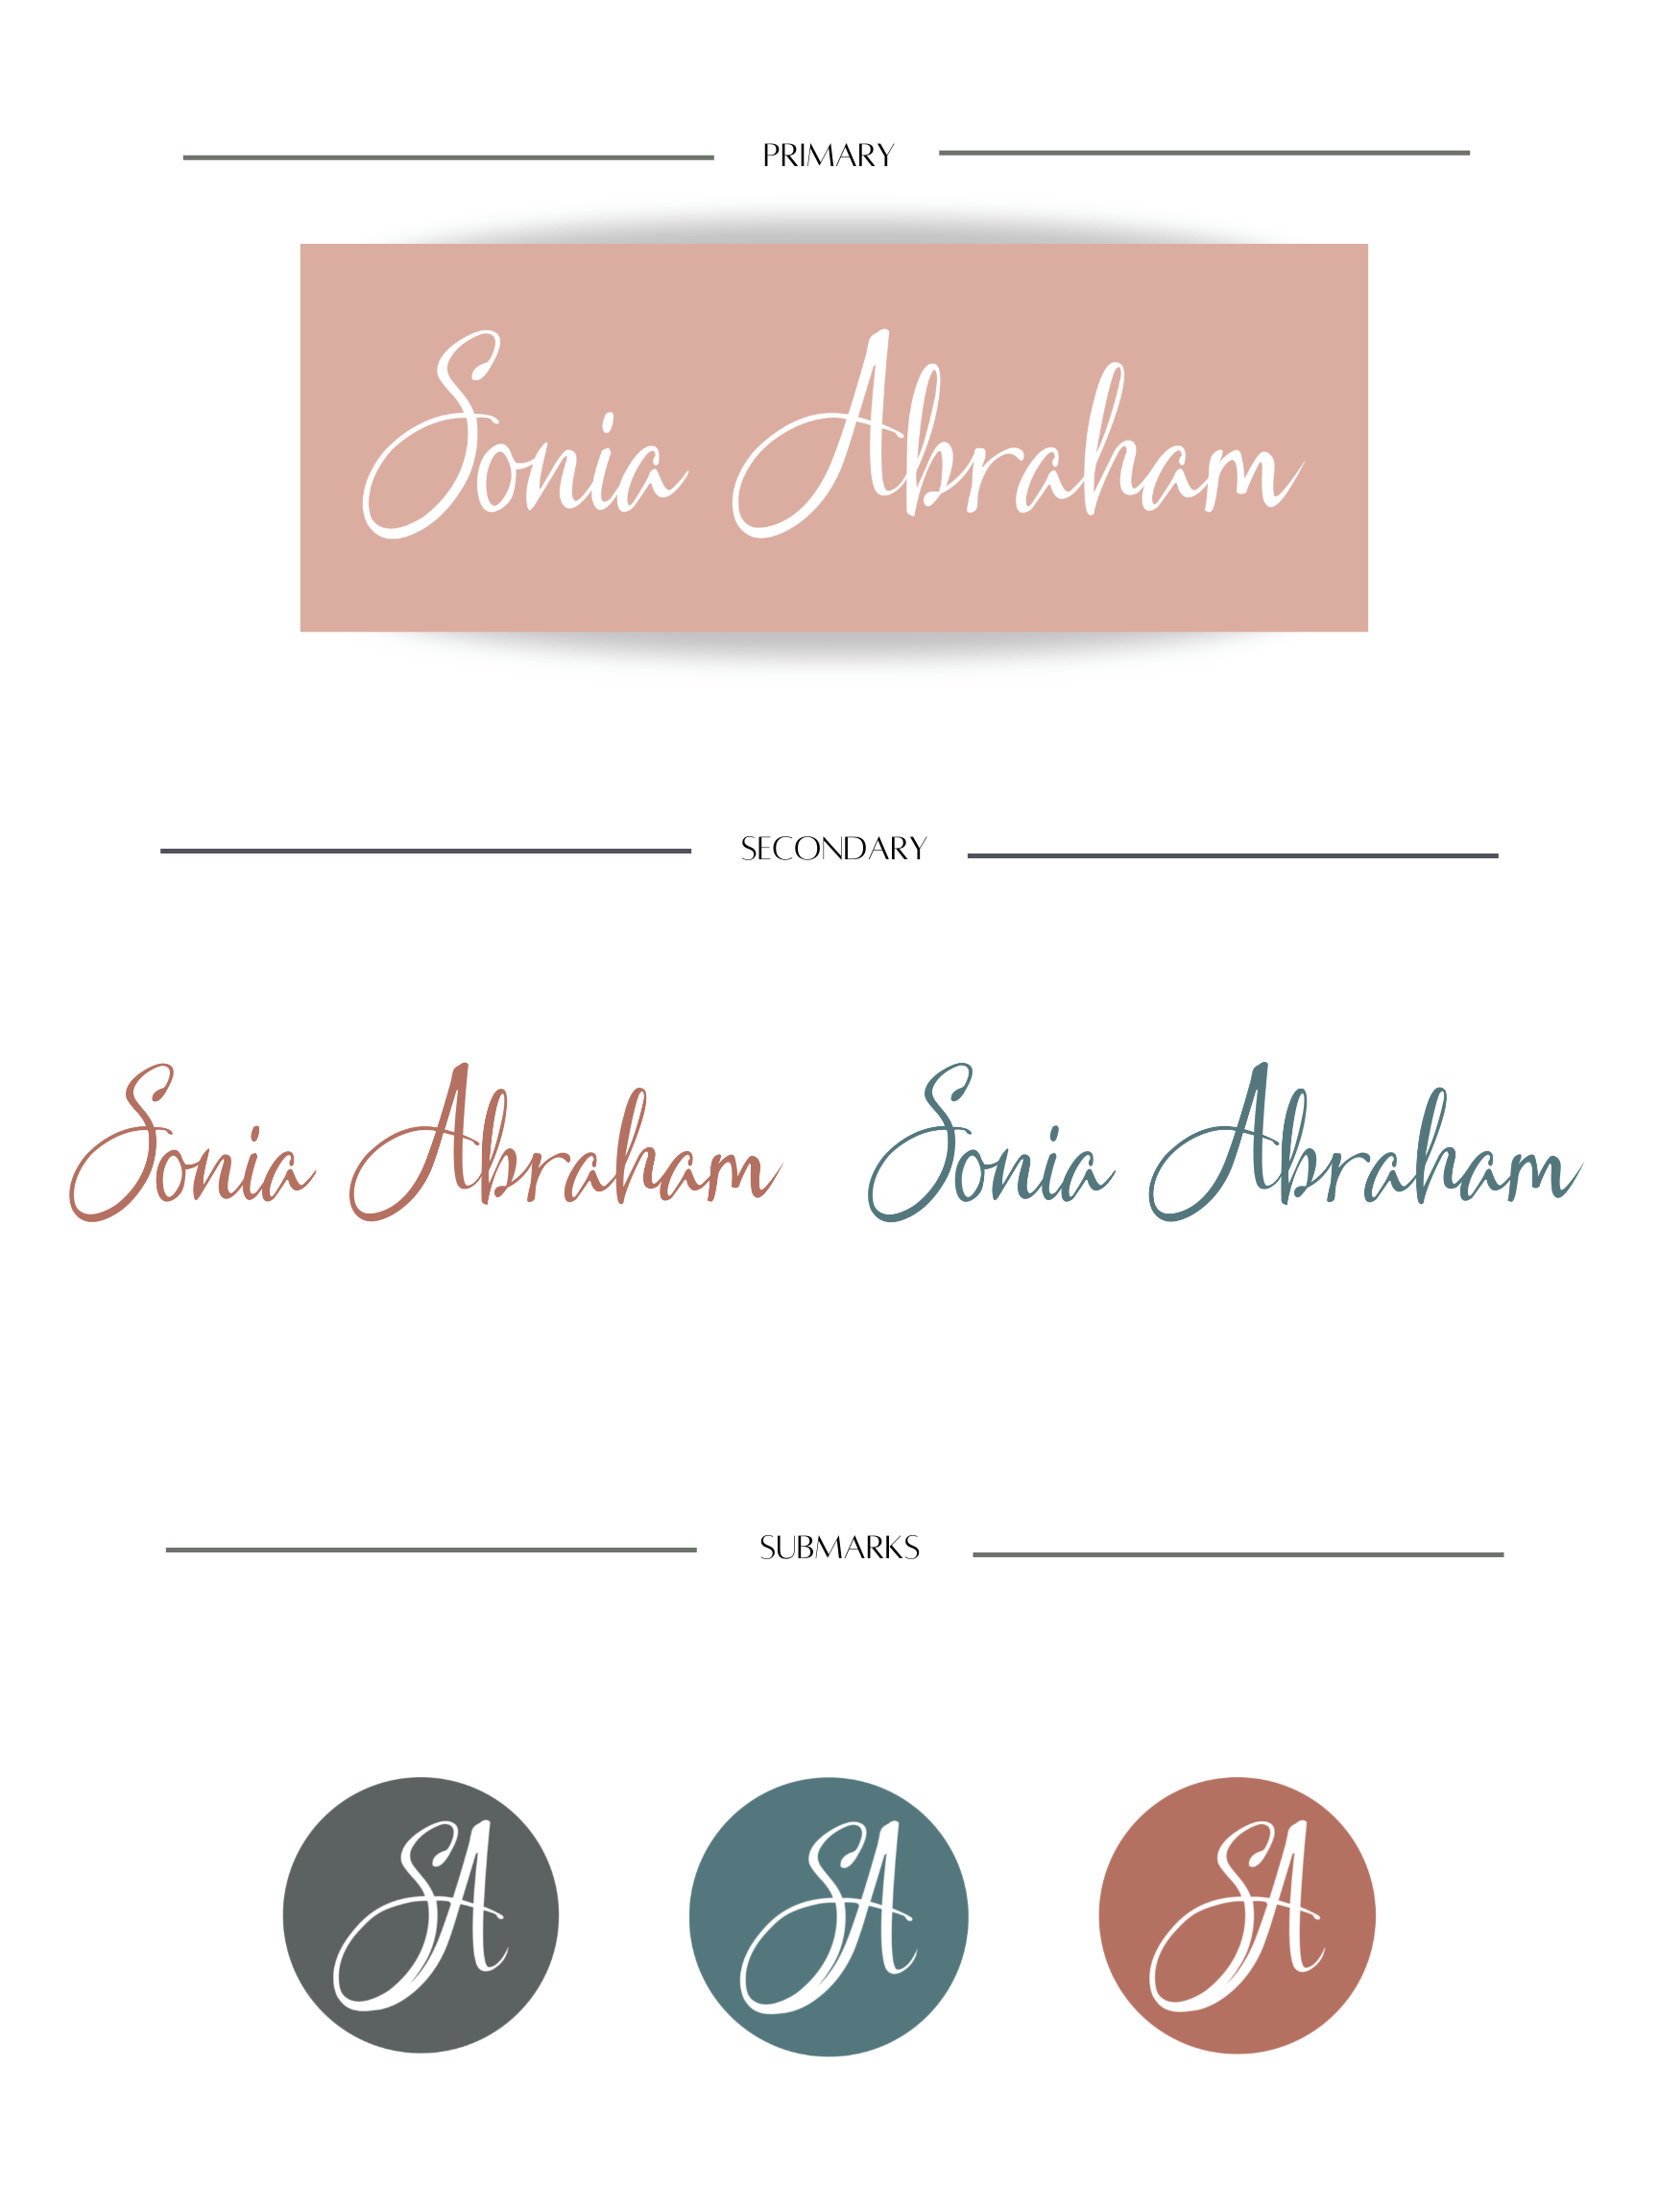 Sonia Abraham - Logo